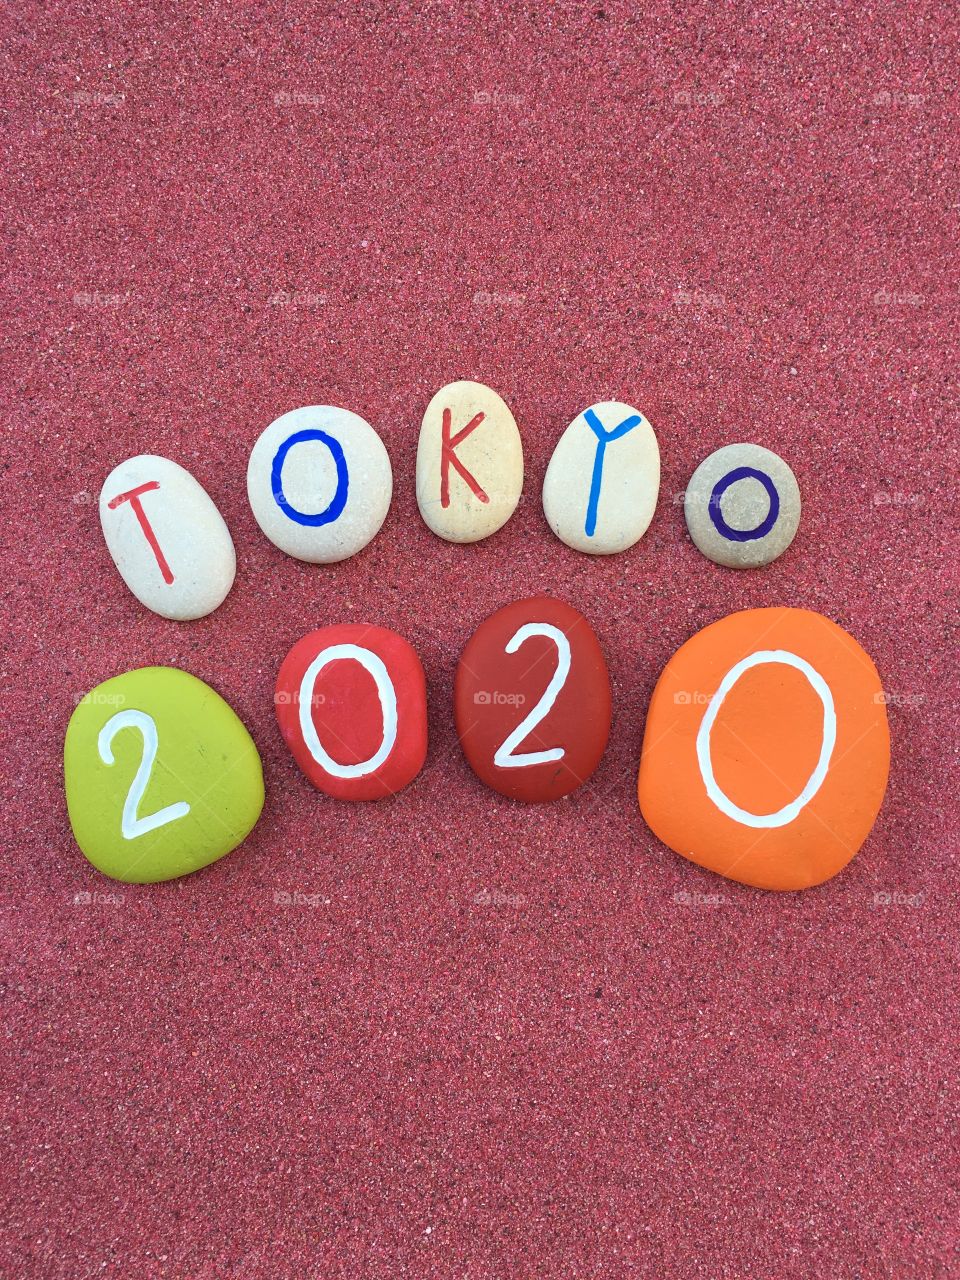 Tokyo 2020, olympic games souvenir